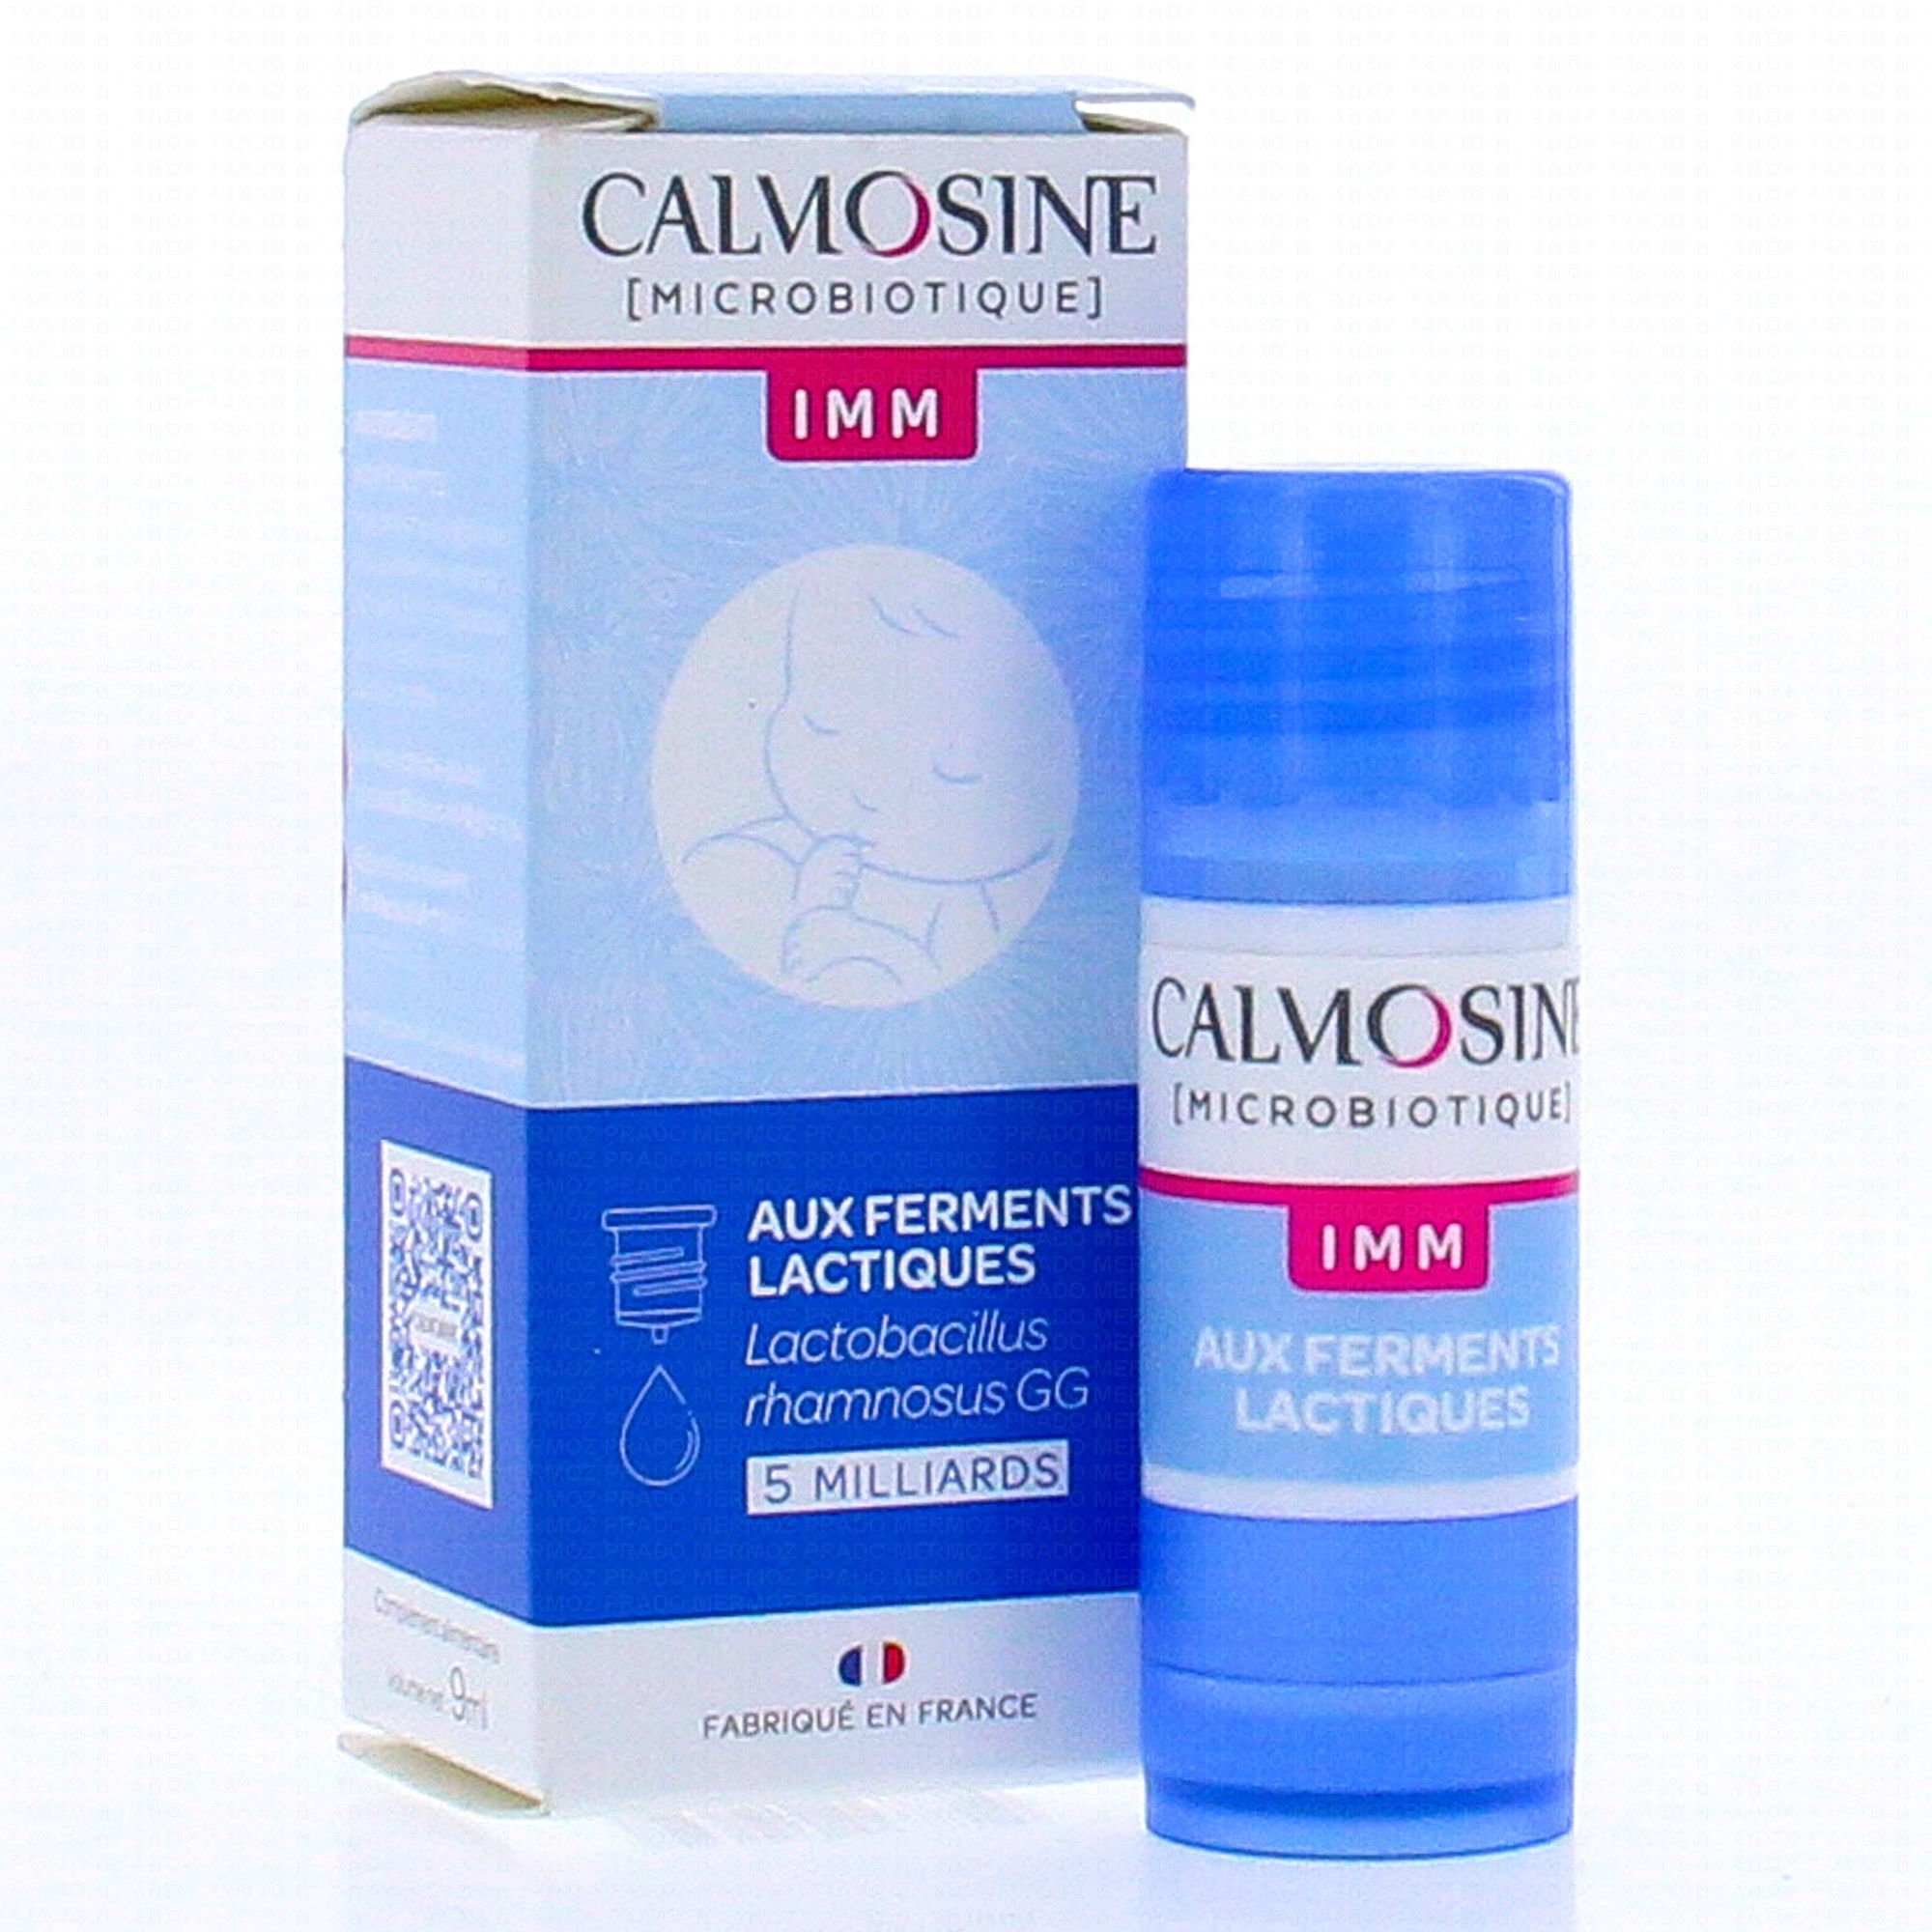 CALMOSINE IMM Ferments lactiques 9ml - Parapharmacie Prado Mermoz